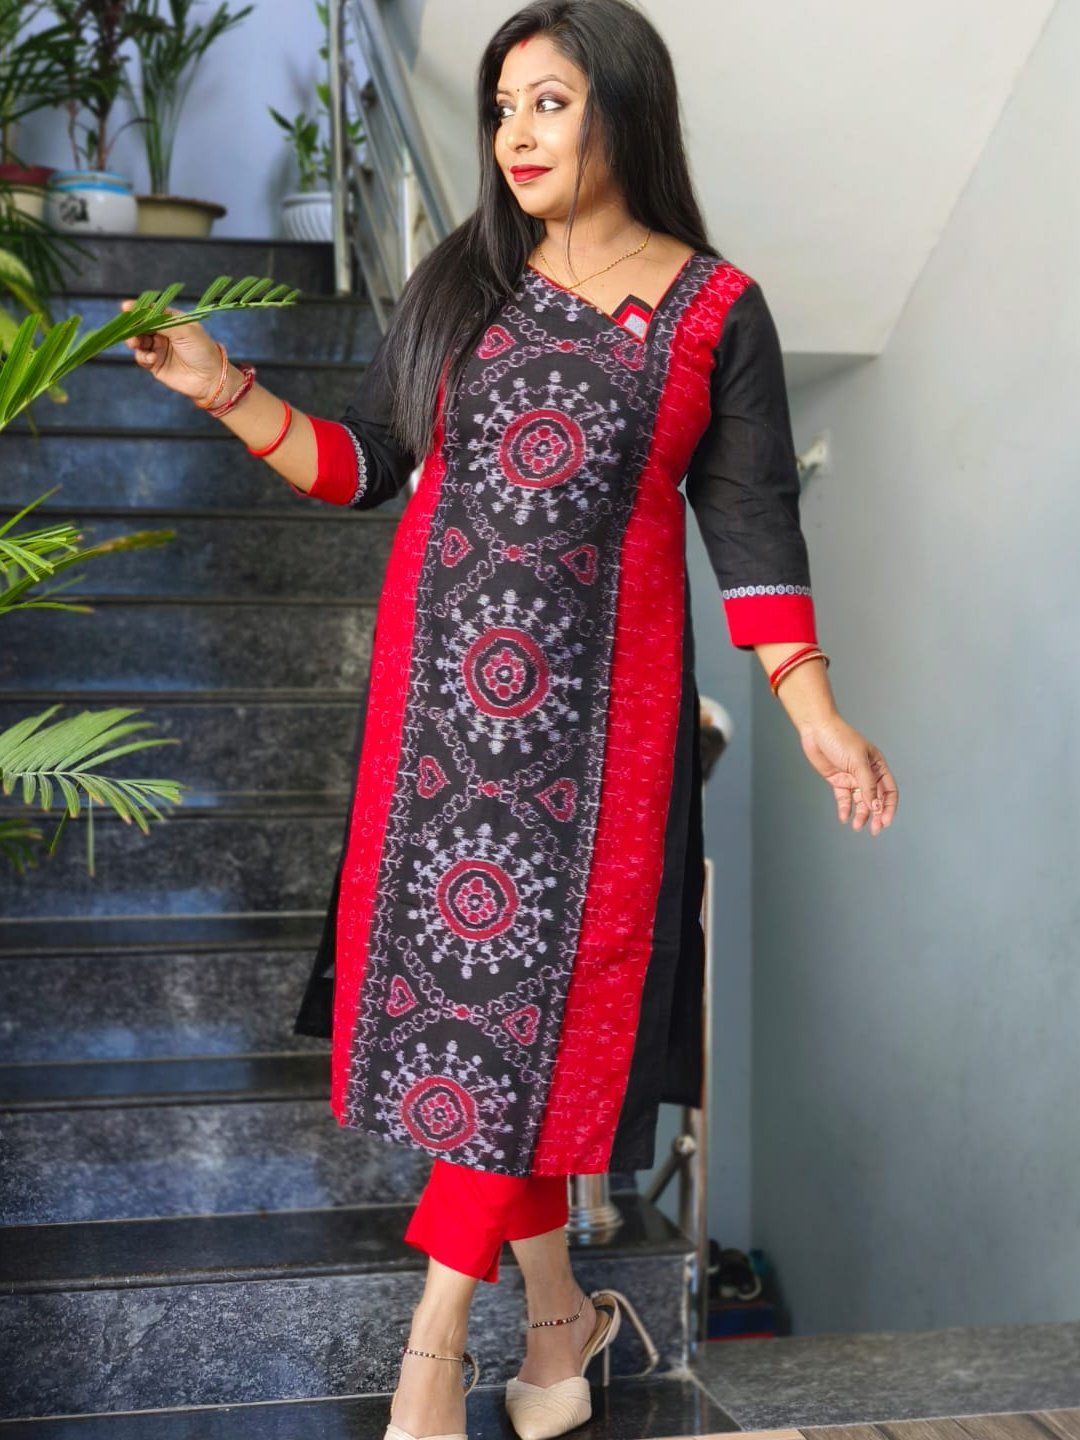 101064 Sambalpuri Handloom Cotton Stiching Kurti - 38 Chest at Rs 1500 |  Pure Cotton Handloom Kurti, हथकरधे की सूती कुर्ती - Priya Fashion, Balangir  | ID: 2851774492155